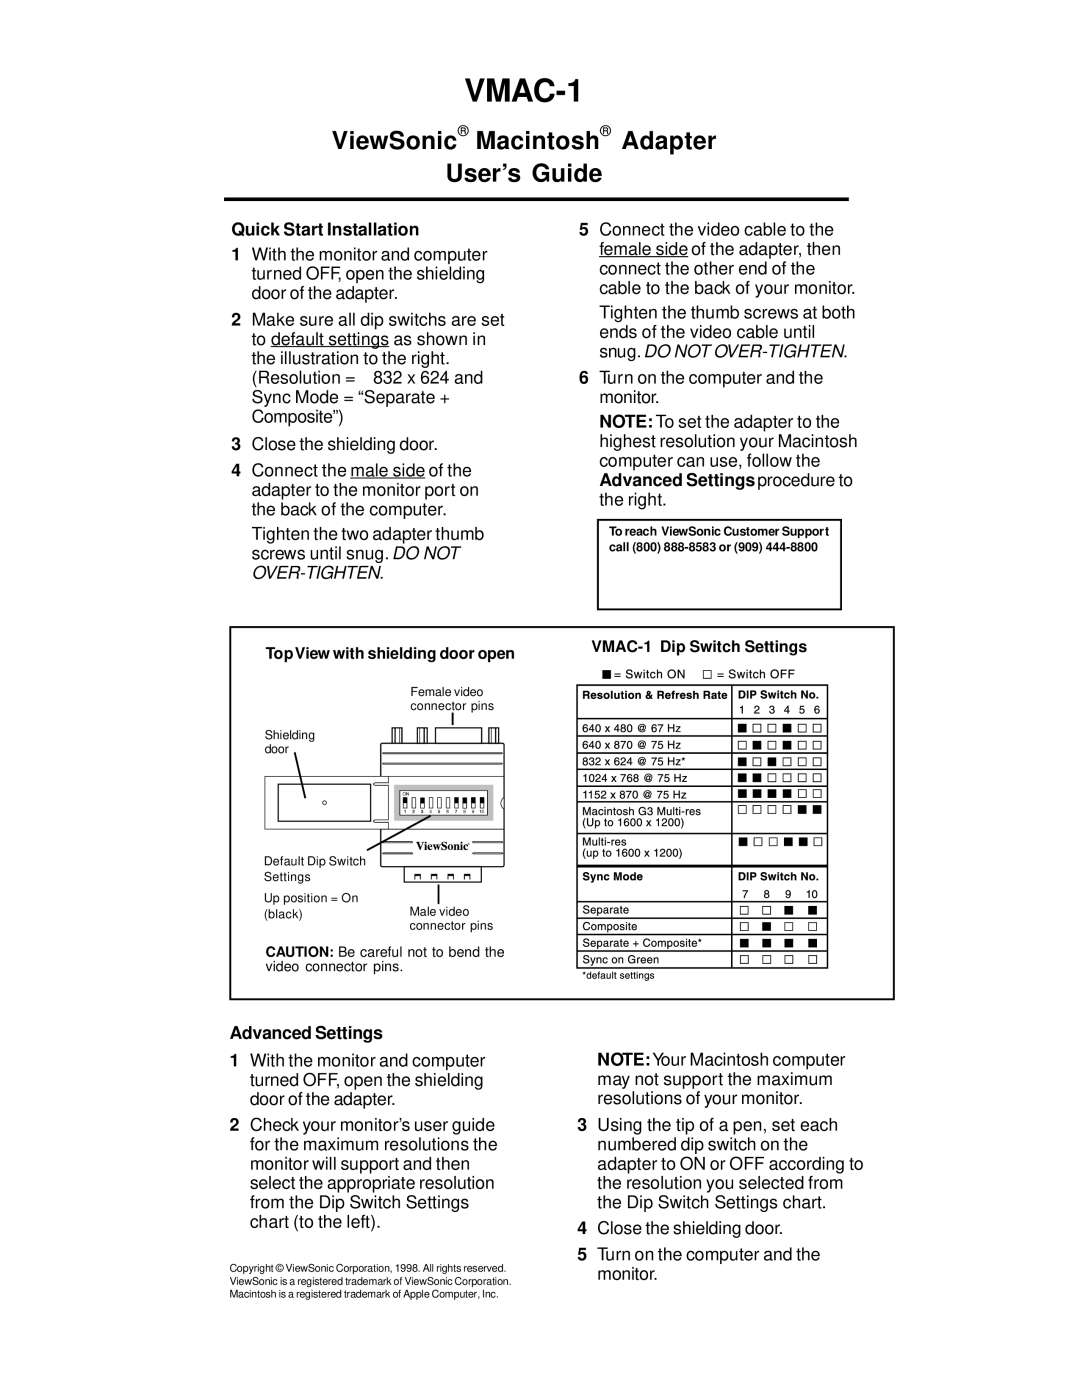 ViewSonic VMAC-1 quick start ViewSonic Macintosh Adapter User’s Guide, Quick Start Installation, Advanced Settings 